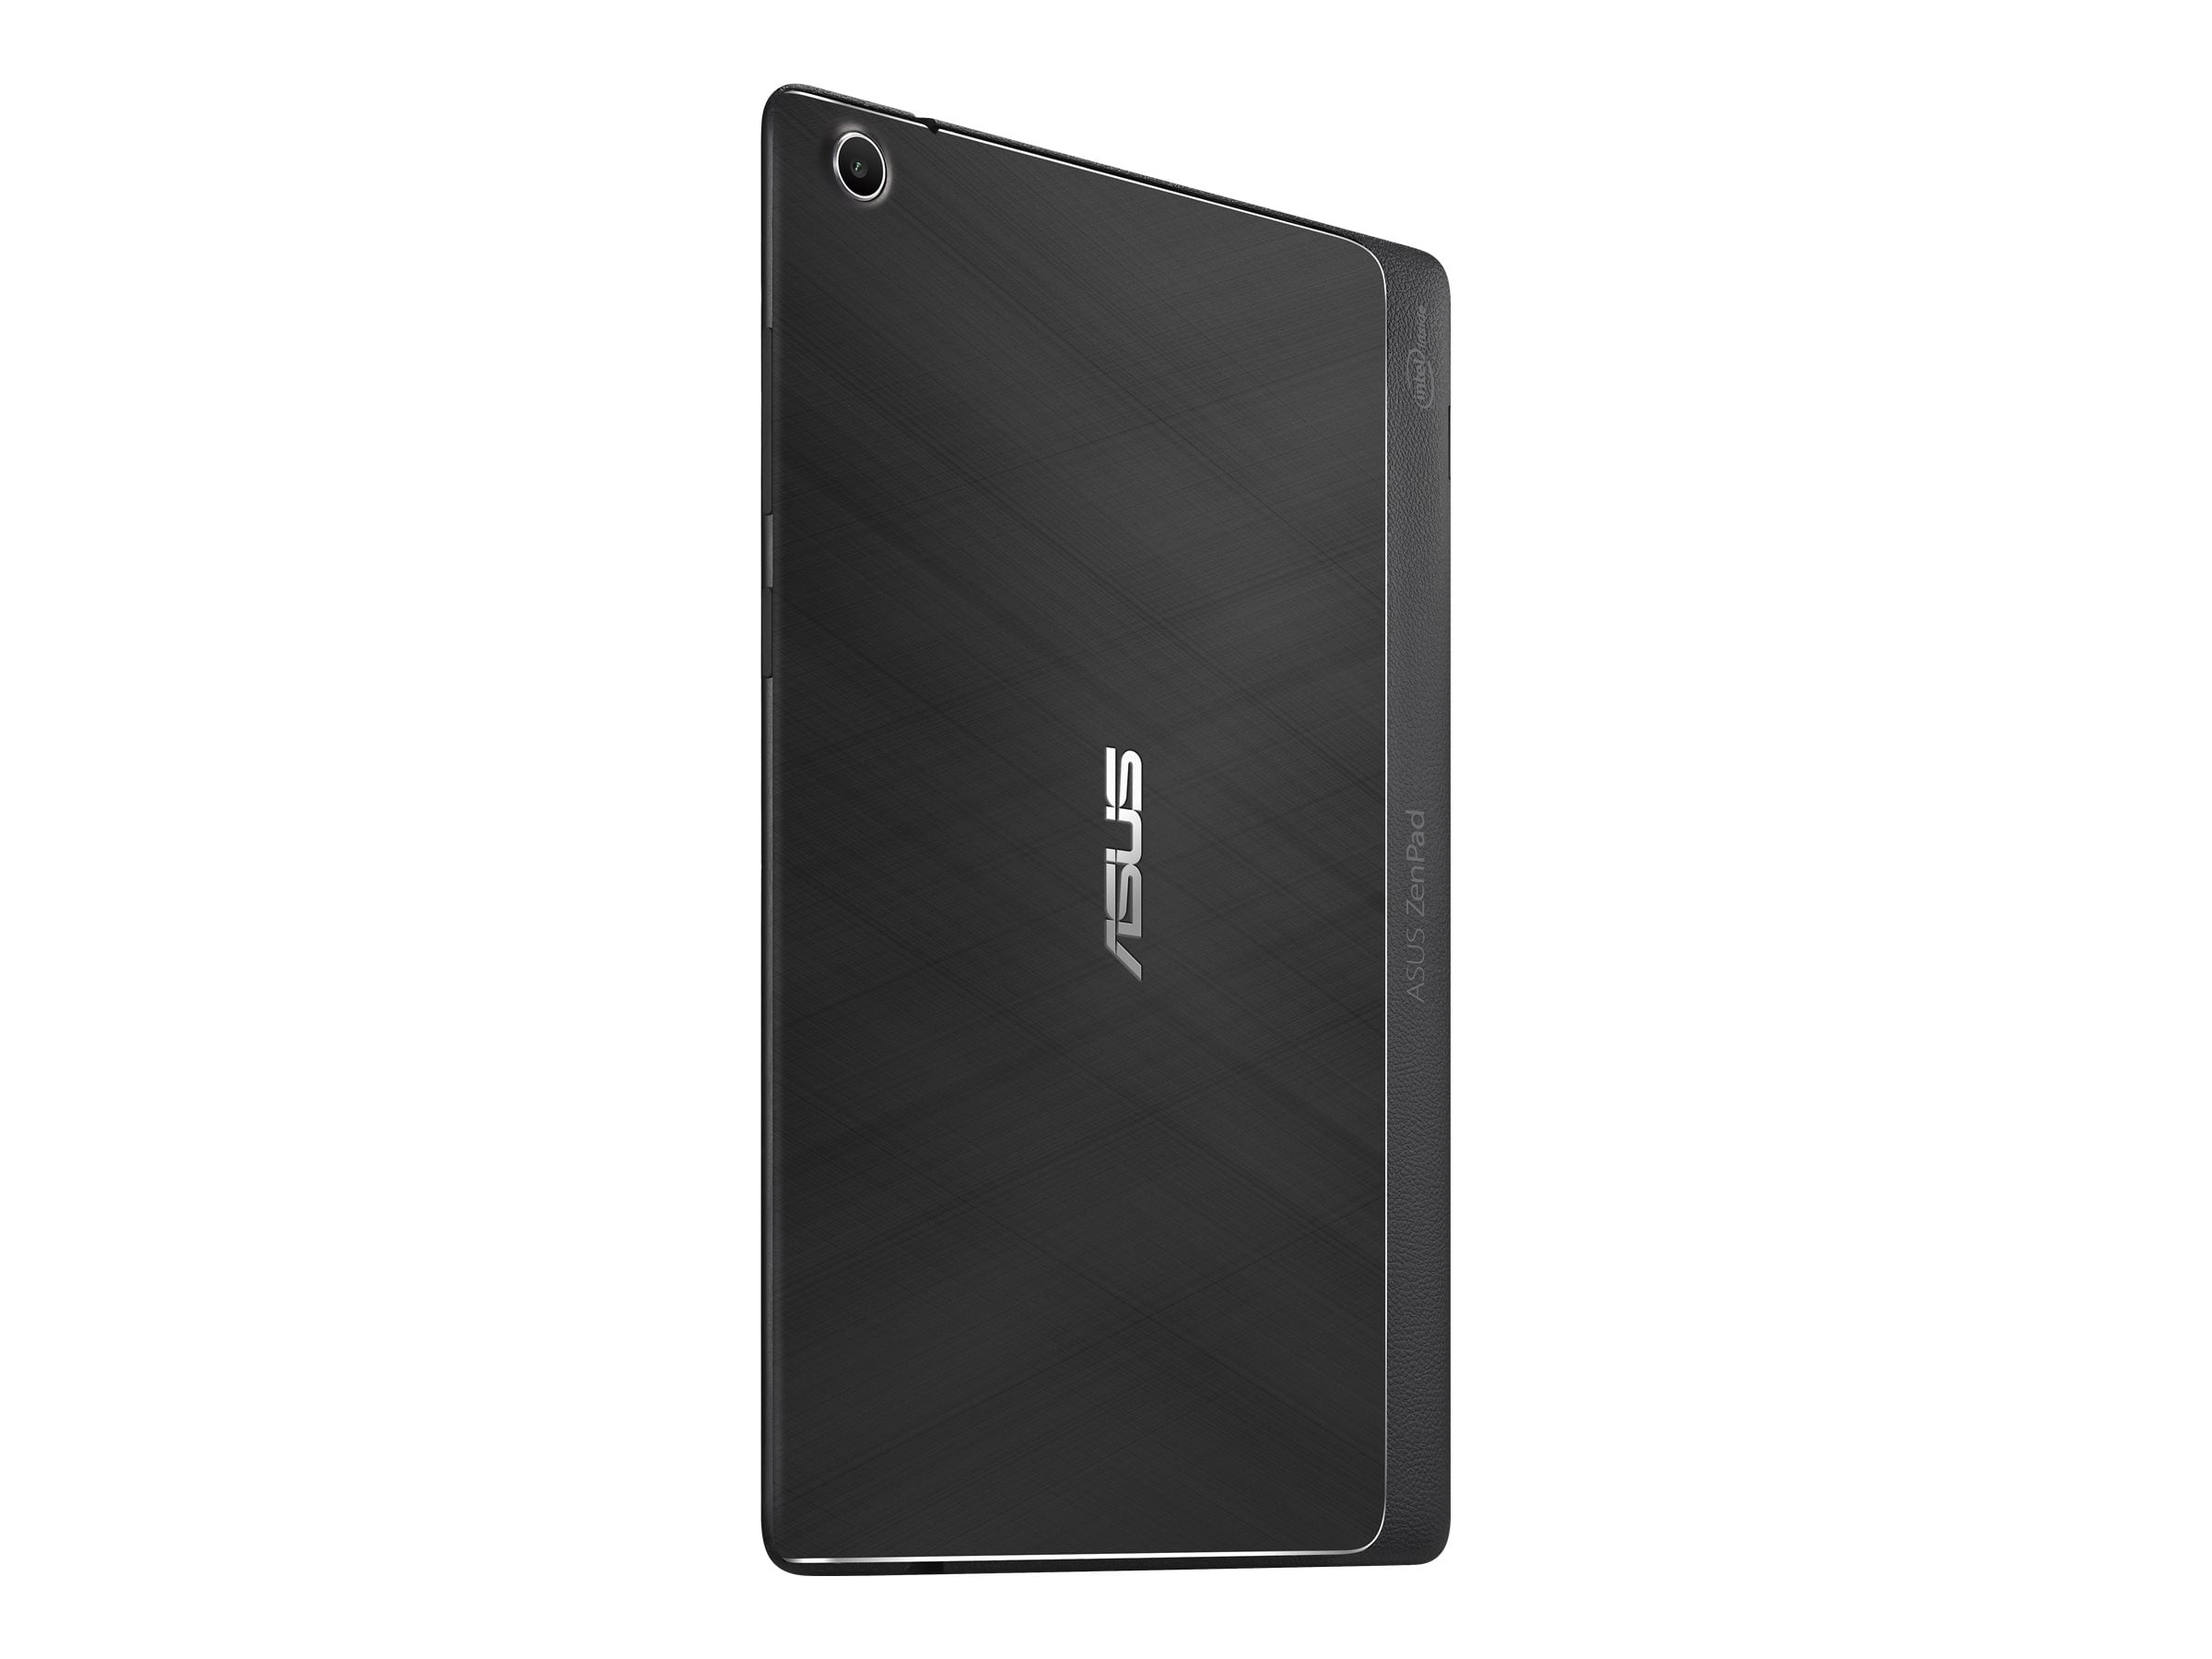 Asus Zenpad S 8 0 Z580c B1 Bk 32 Gb Tablet 8 In Plane Switching Ips Technology Wireless Lan Intel Atom Z3530 Quad Core 4 Core 1 33 Ghz Black 2 Gb